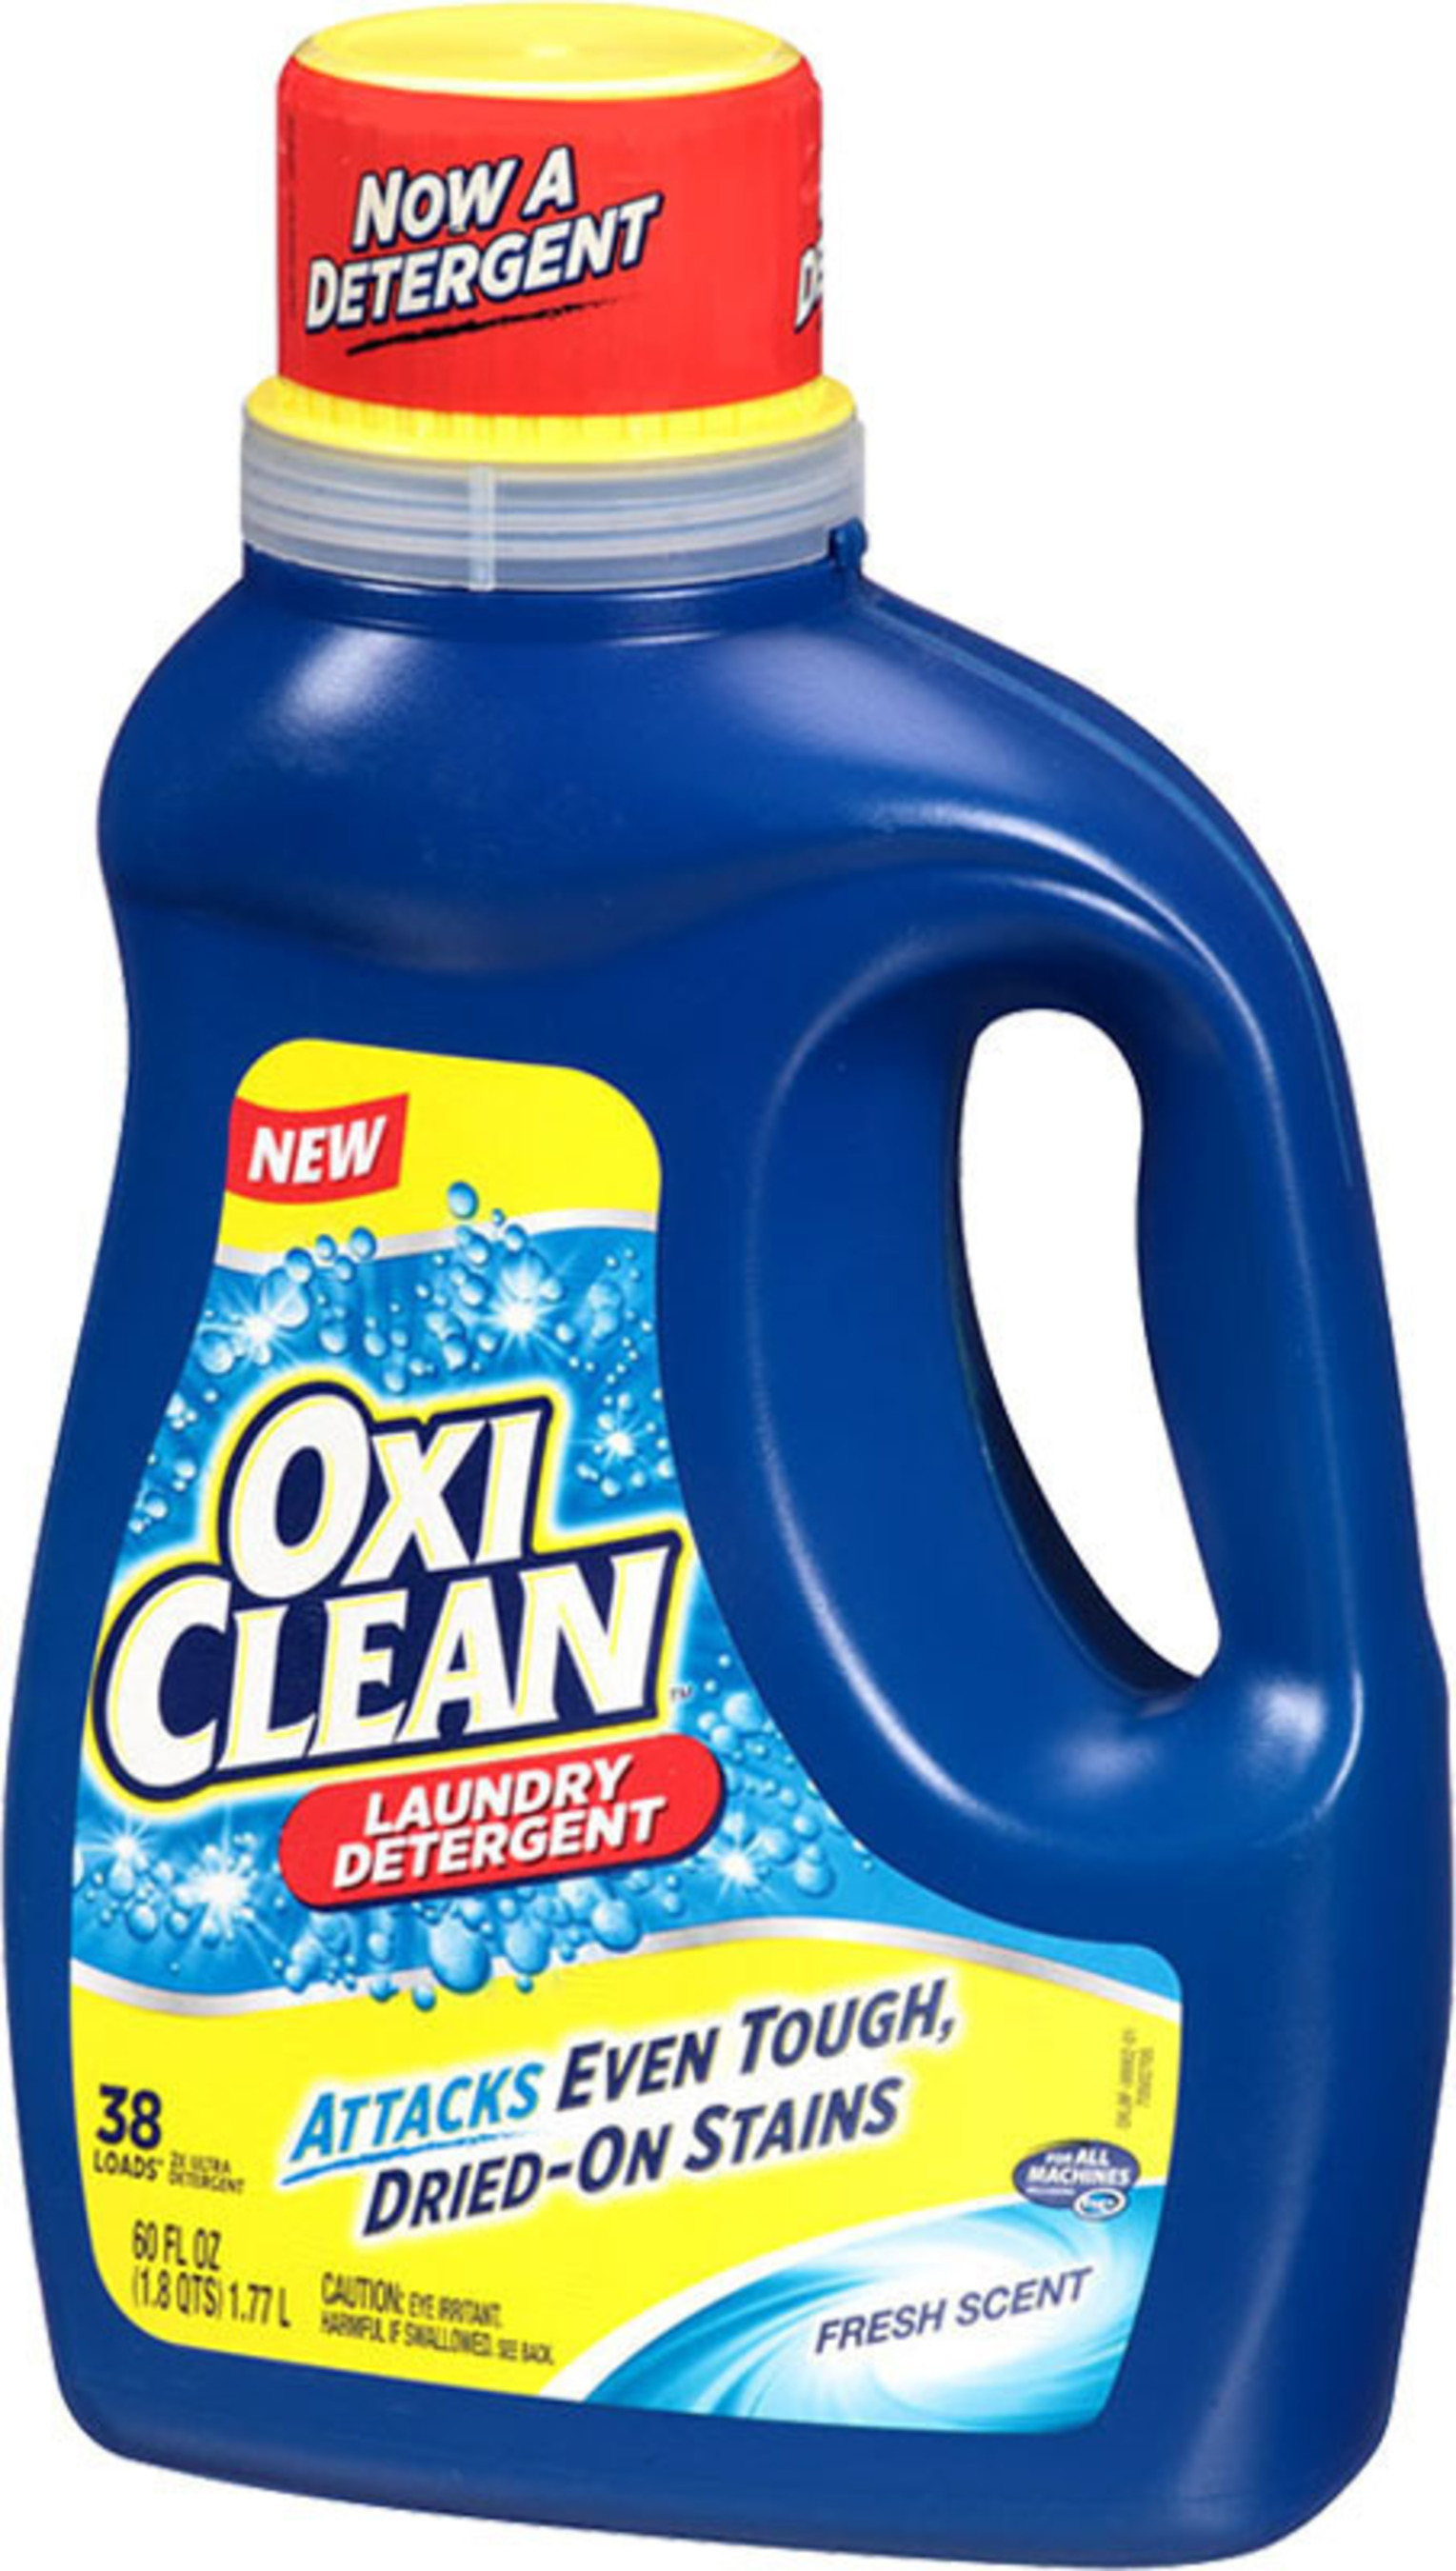 NEW OxiClean Laundry Detergent. (PRNewsFoto/CHURCH _ DWIGHT CO__ INC_)